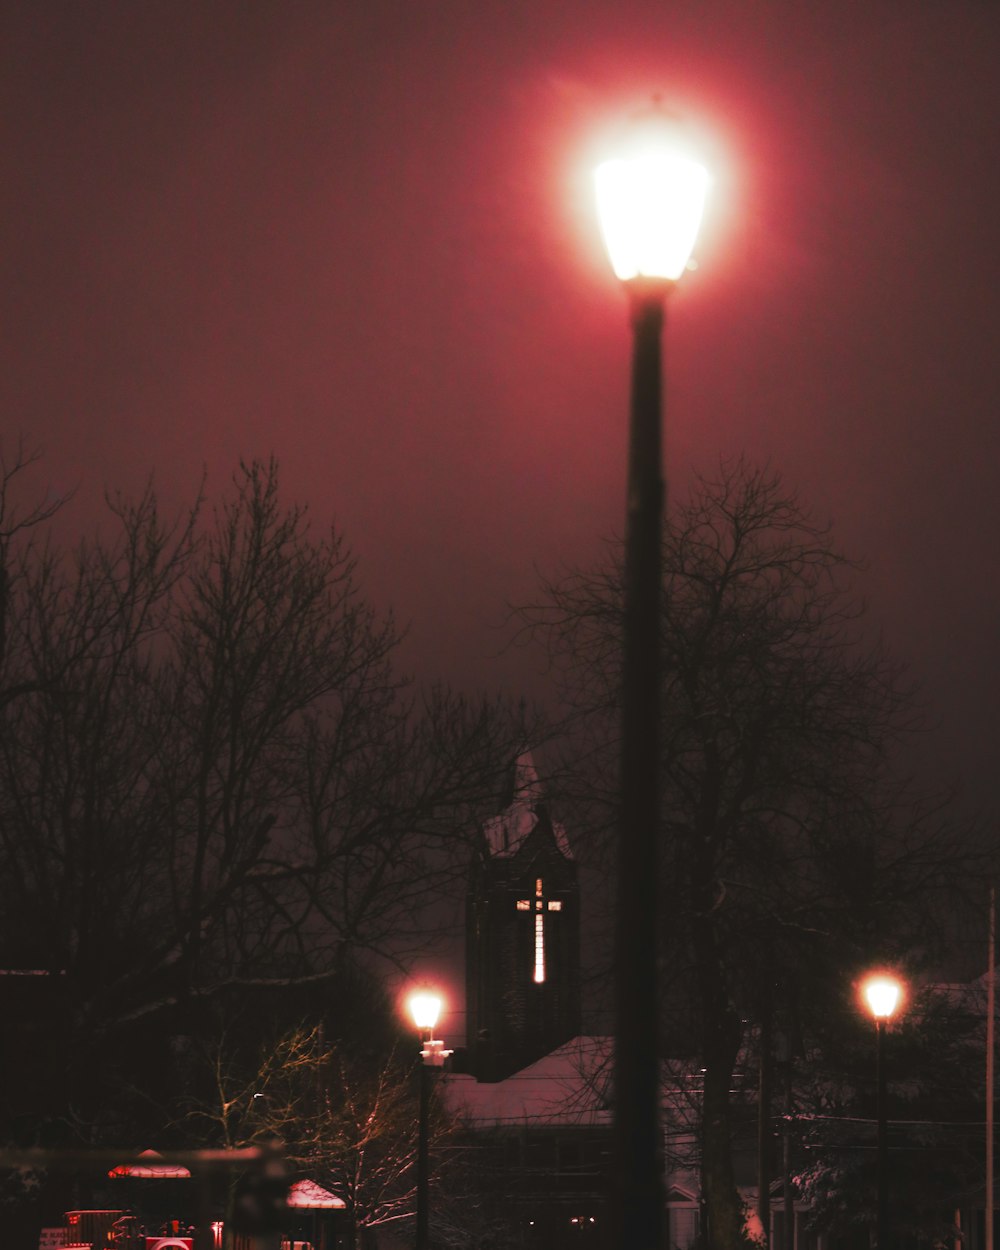 a street light on a dark street at night